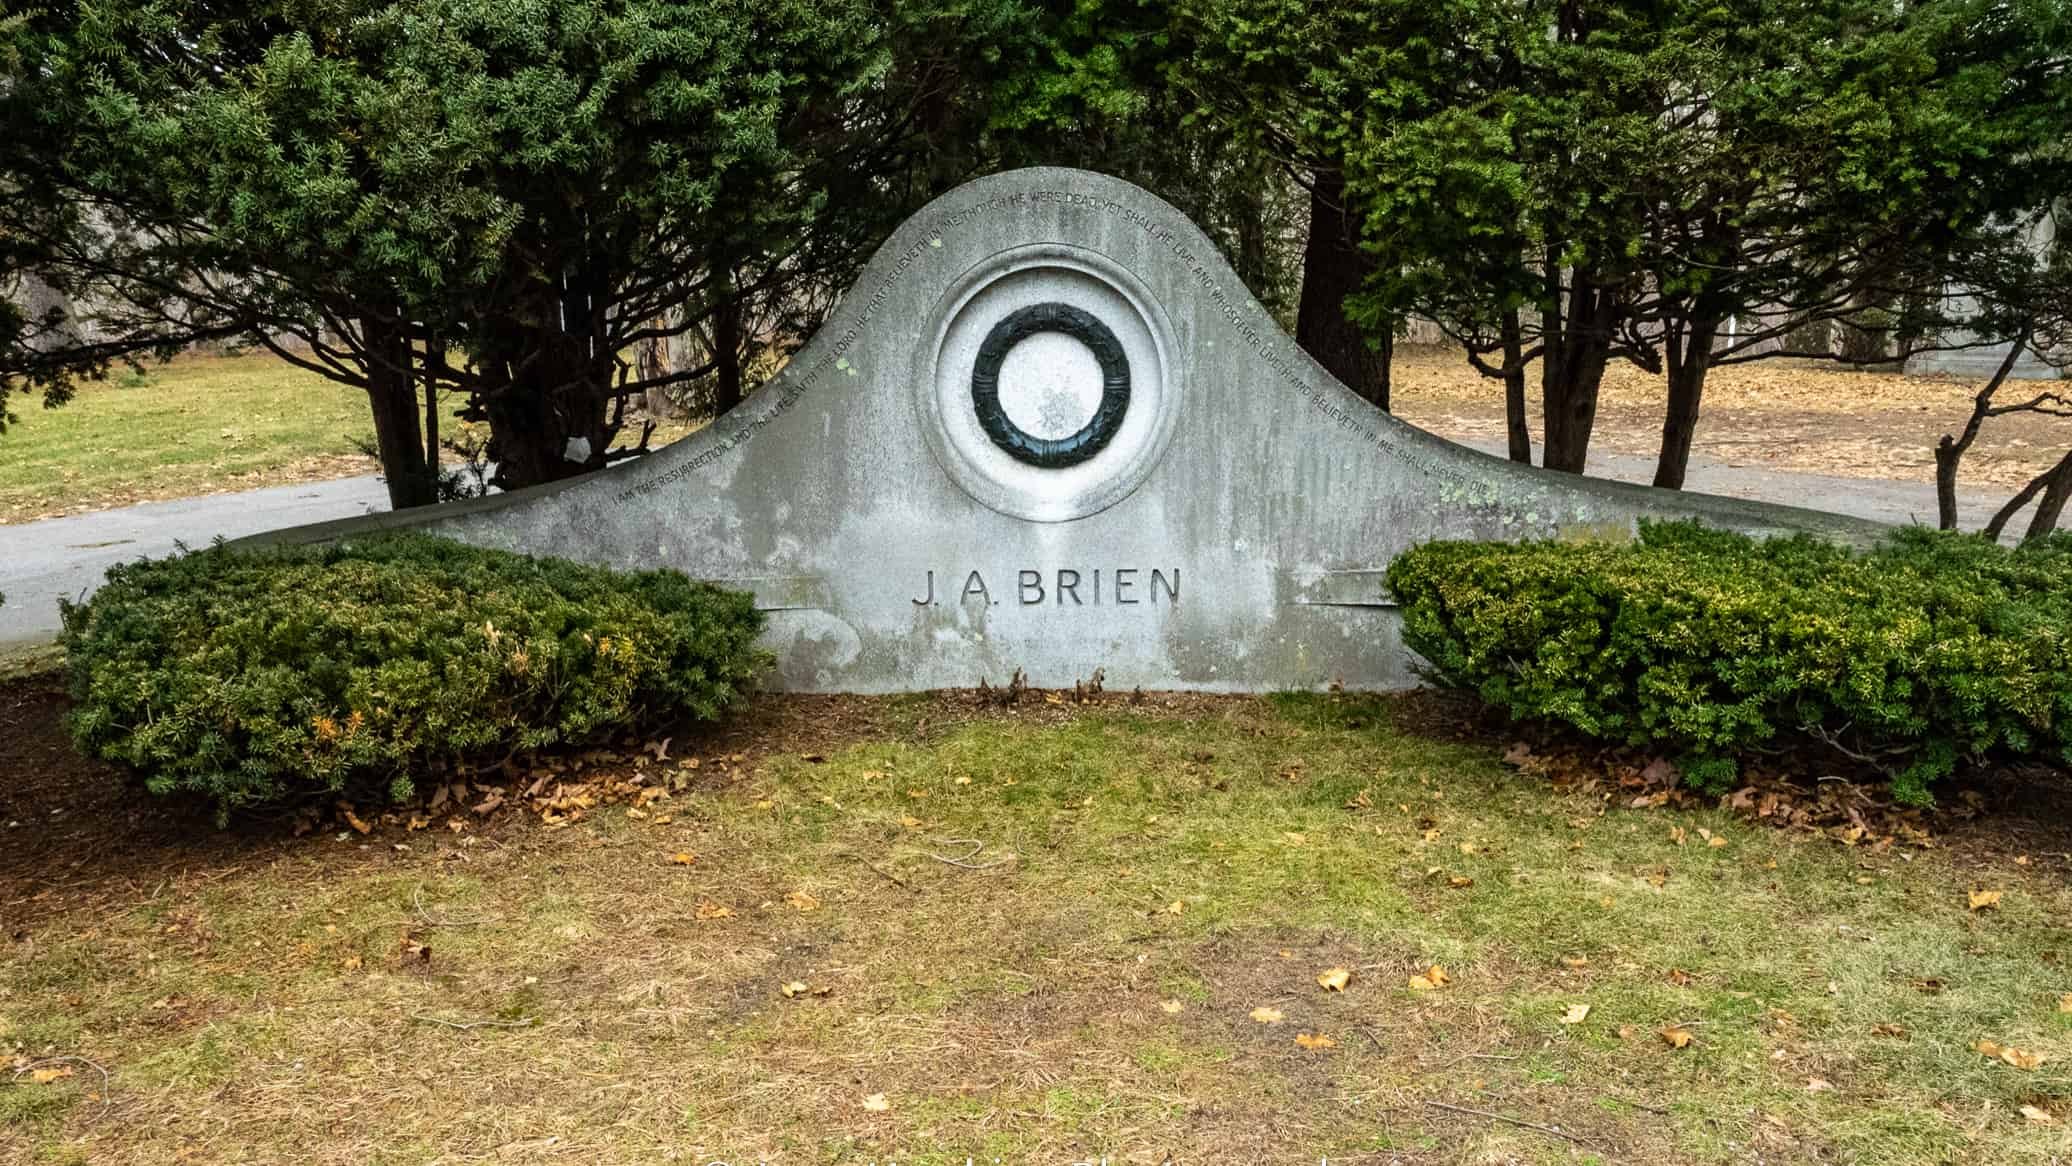 JA Brien.jpg